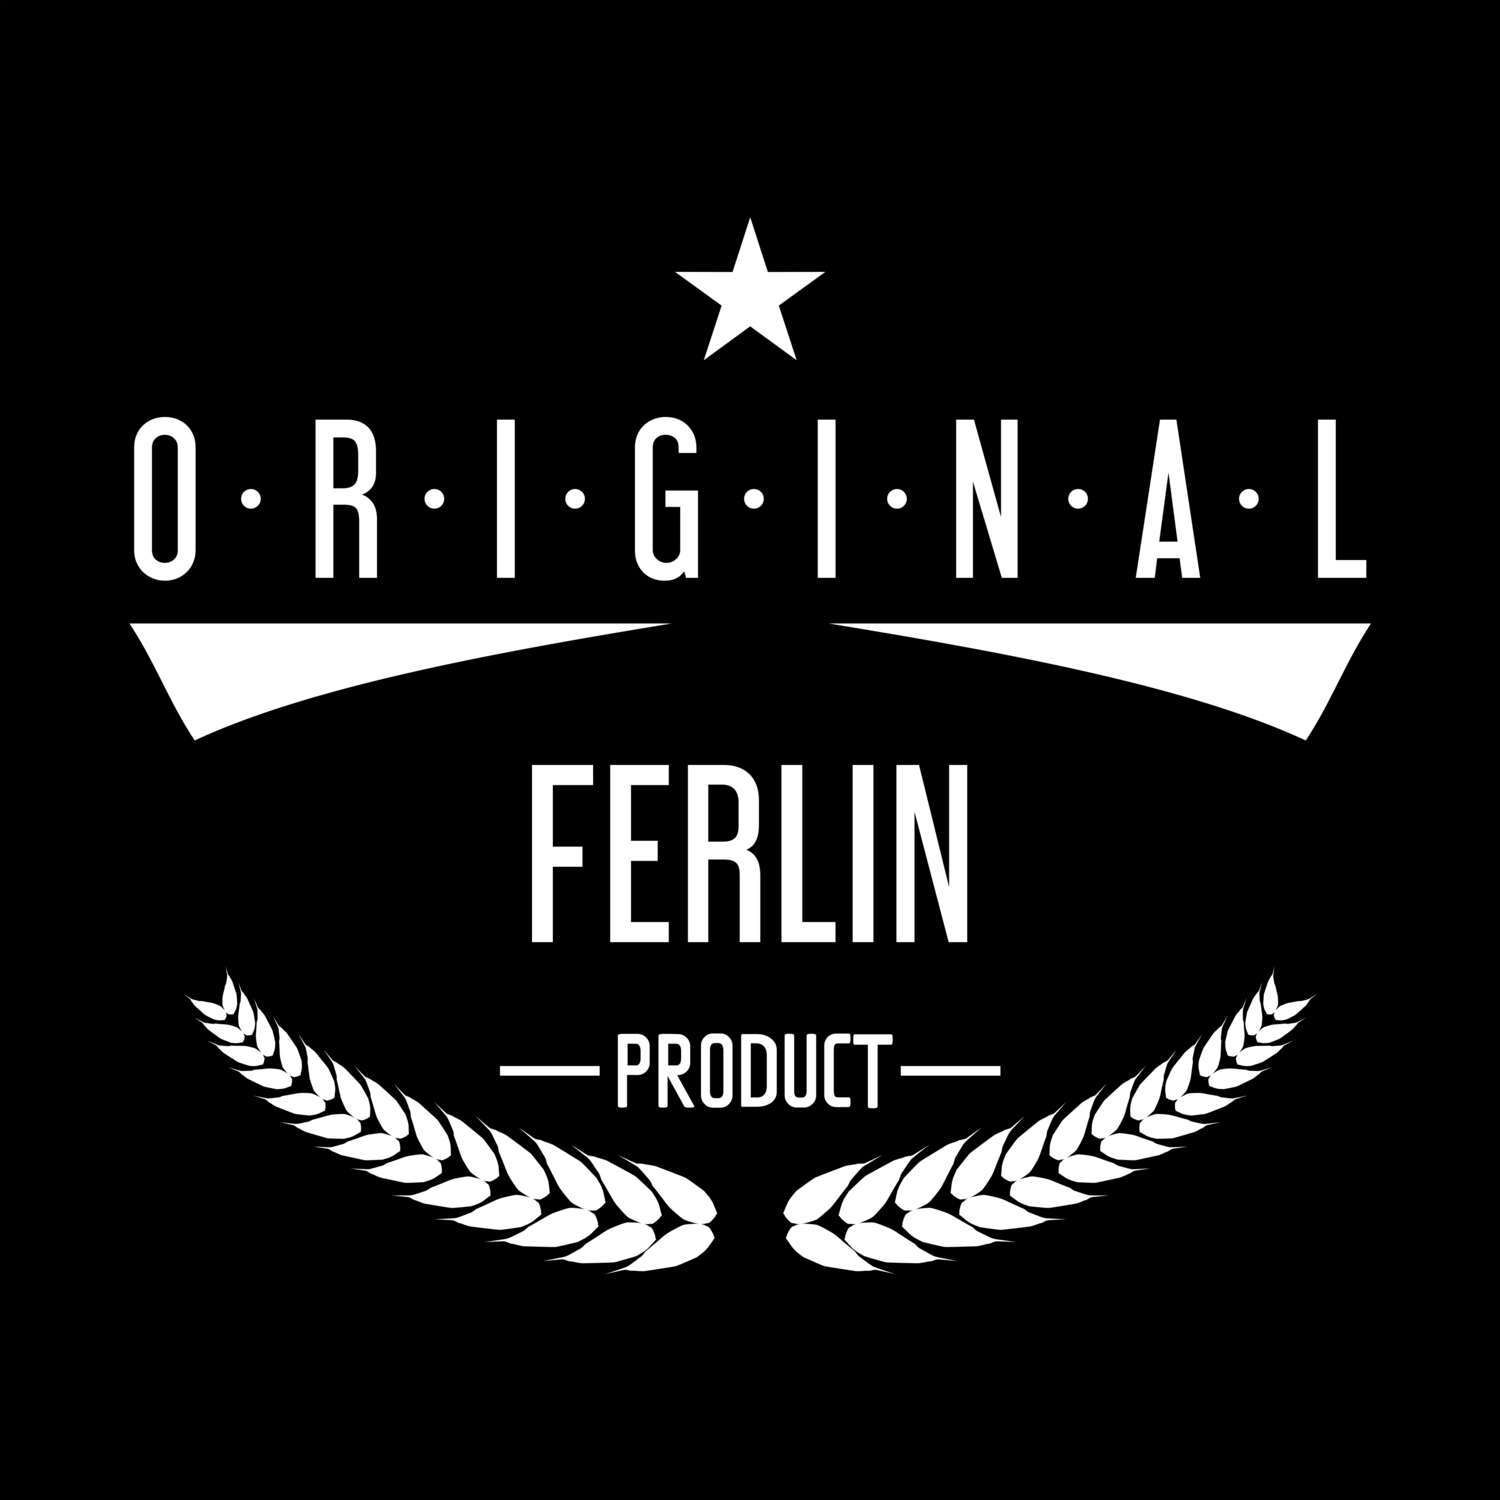 Ferlin T-Shirt »Original Product«